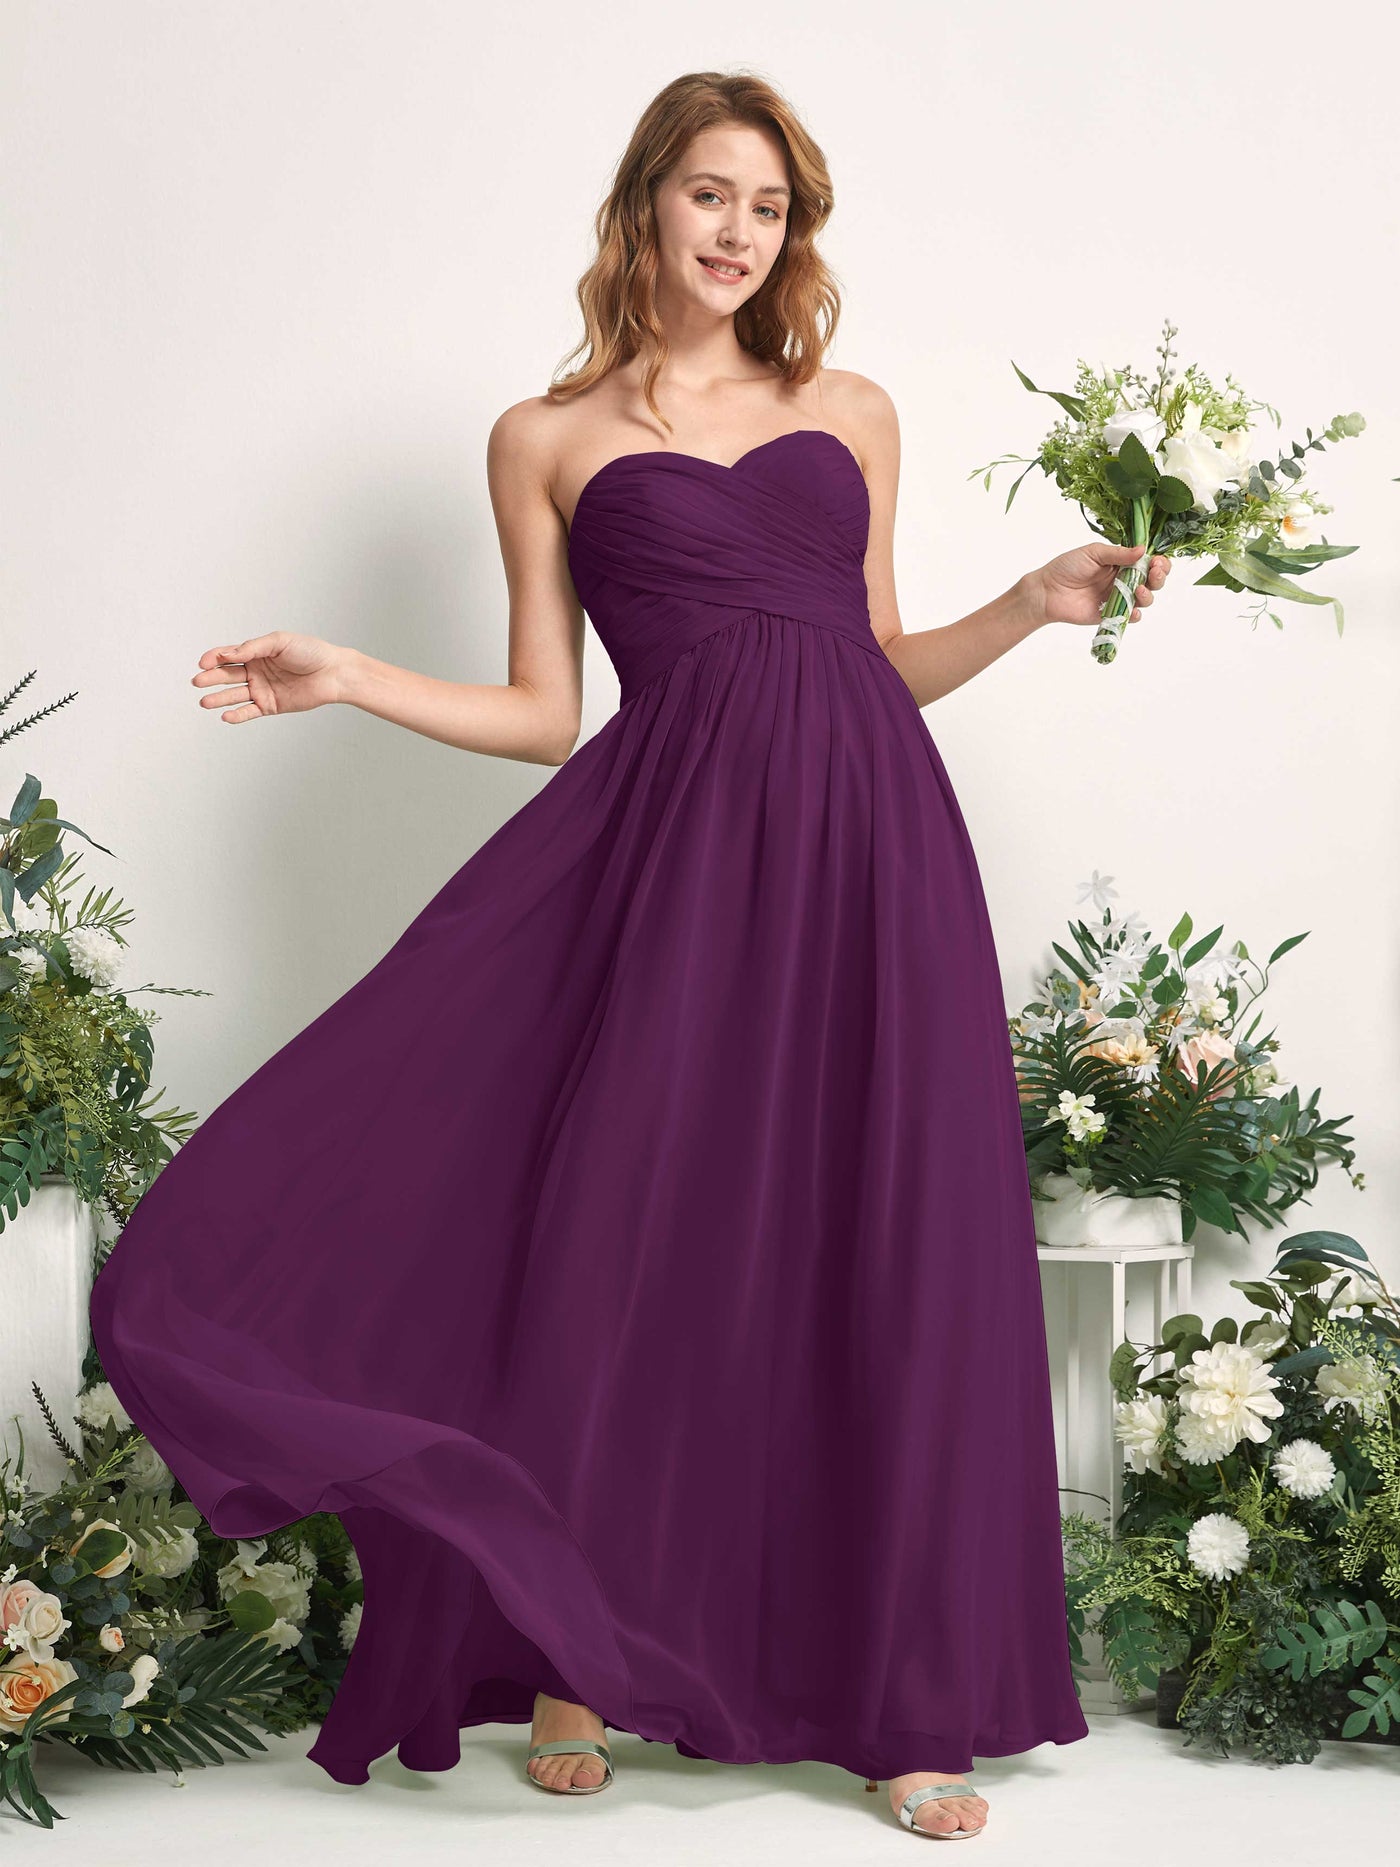 Bridesmaid Dress A-line Chiffon Sweetheart Full Length Sleeveless Wedding Party Dress - Grape (81226931)#color_grape